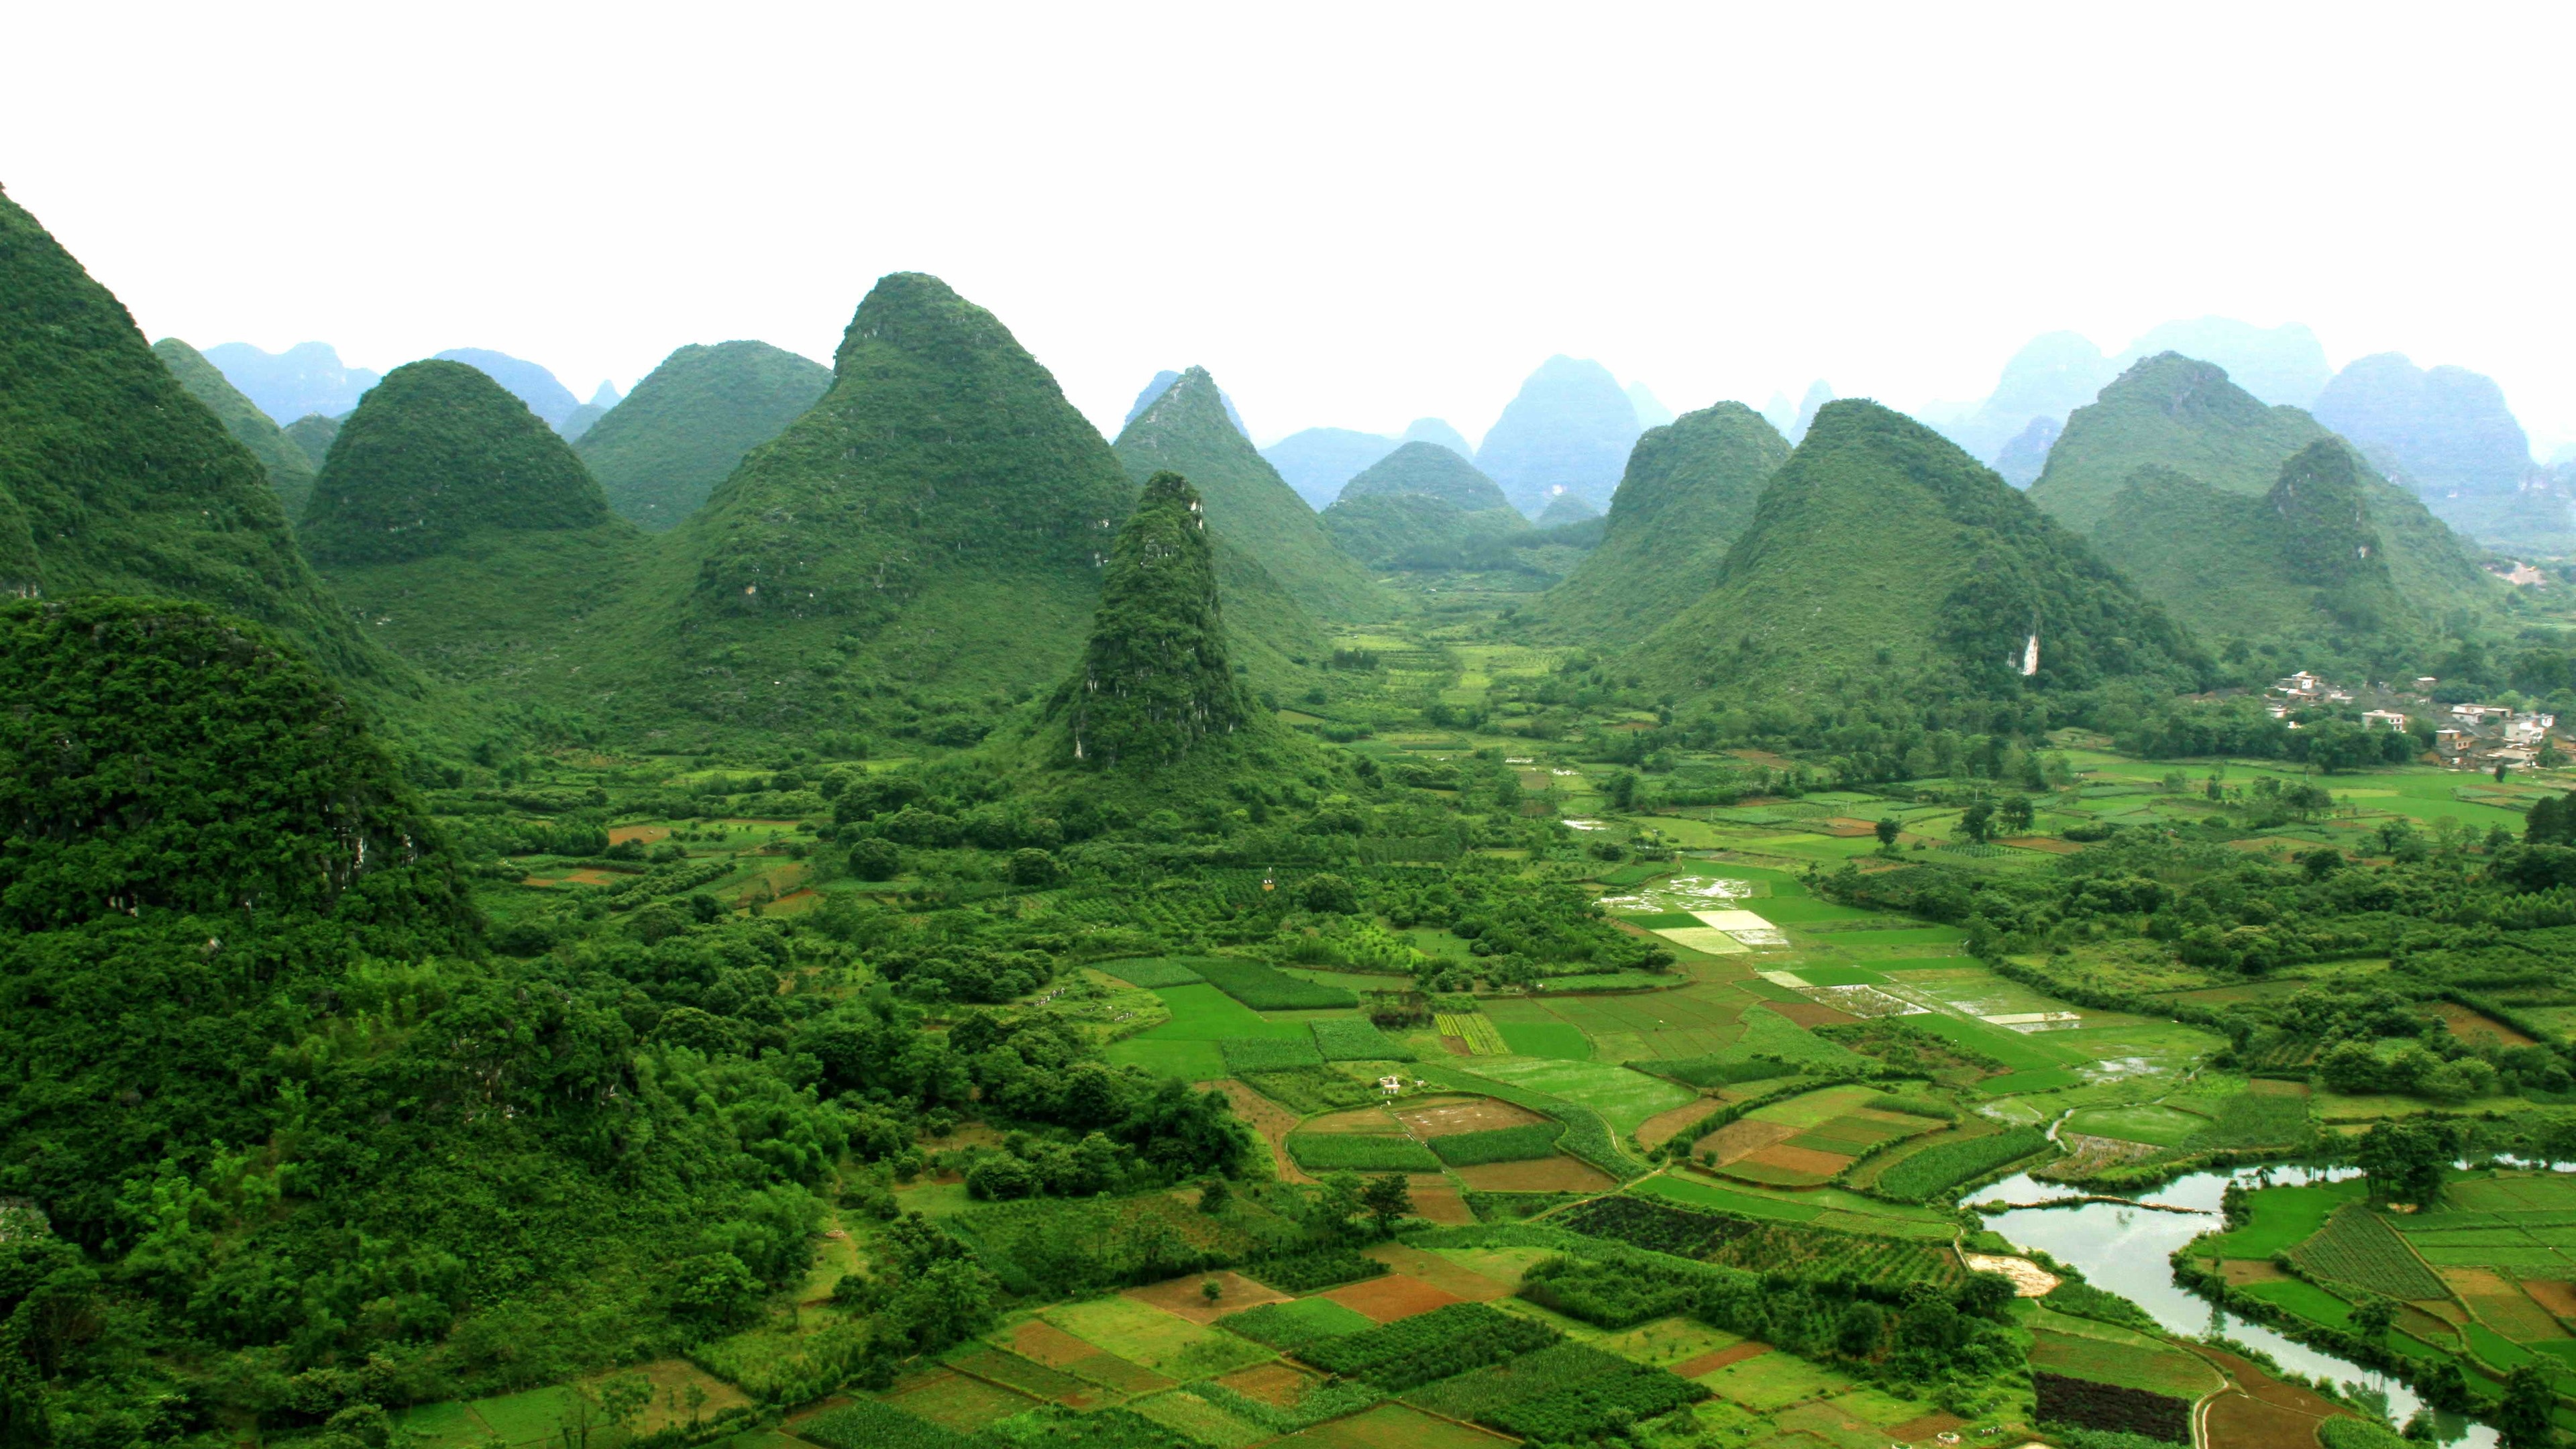 Li River beauty, Majestic mountains, China's wonders, Scenic wallpapers, 3840x2160 4K Desktop